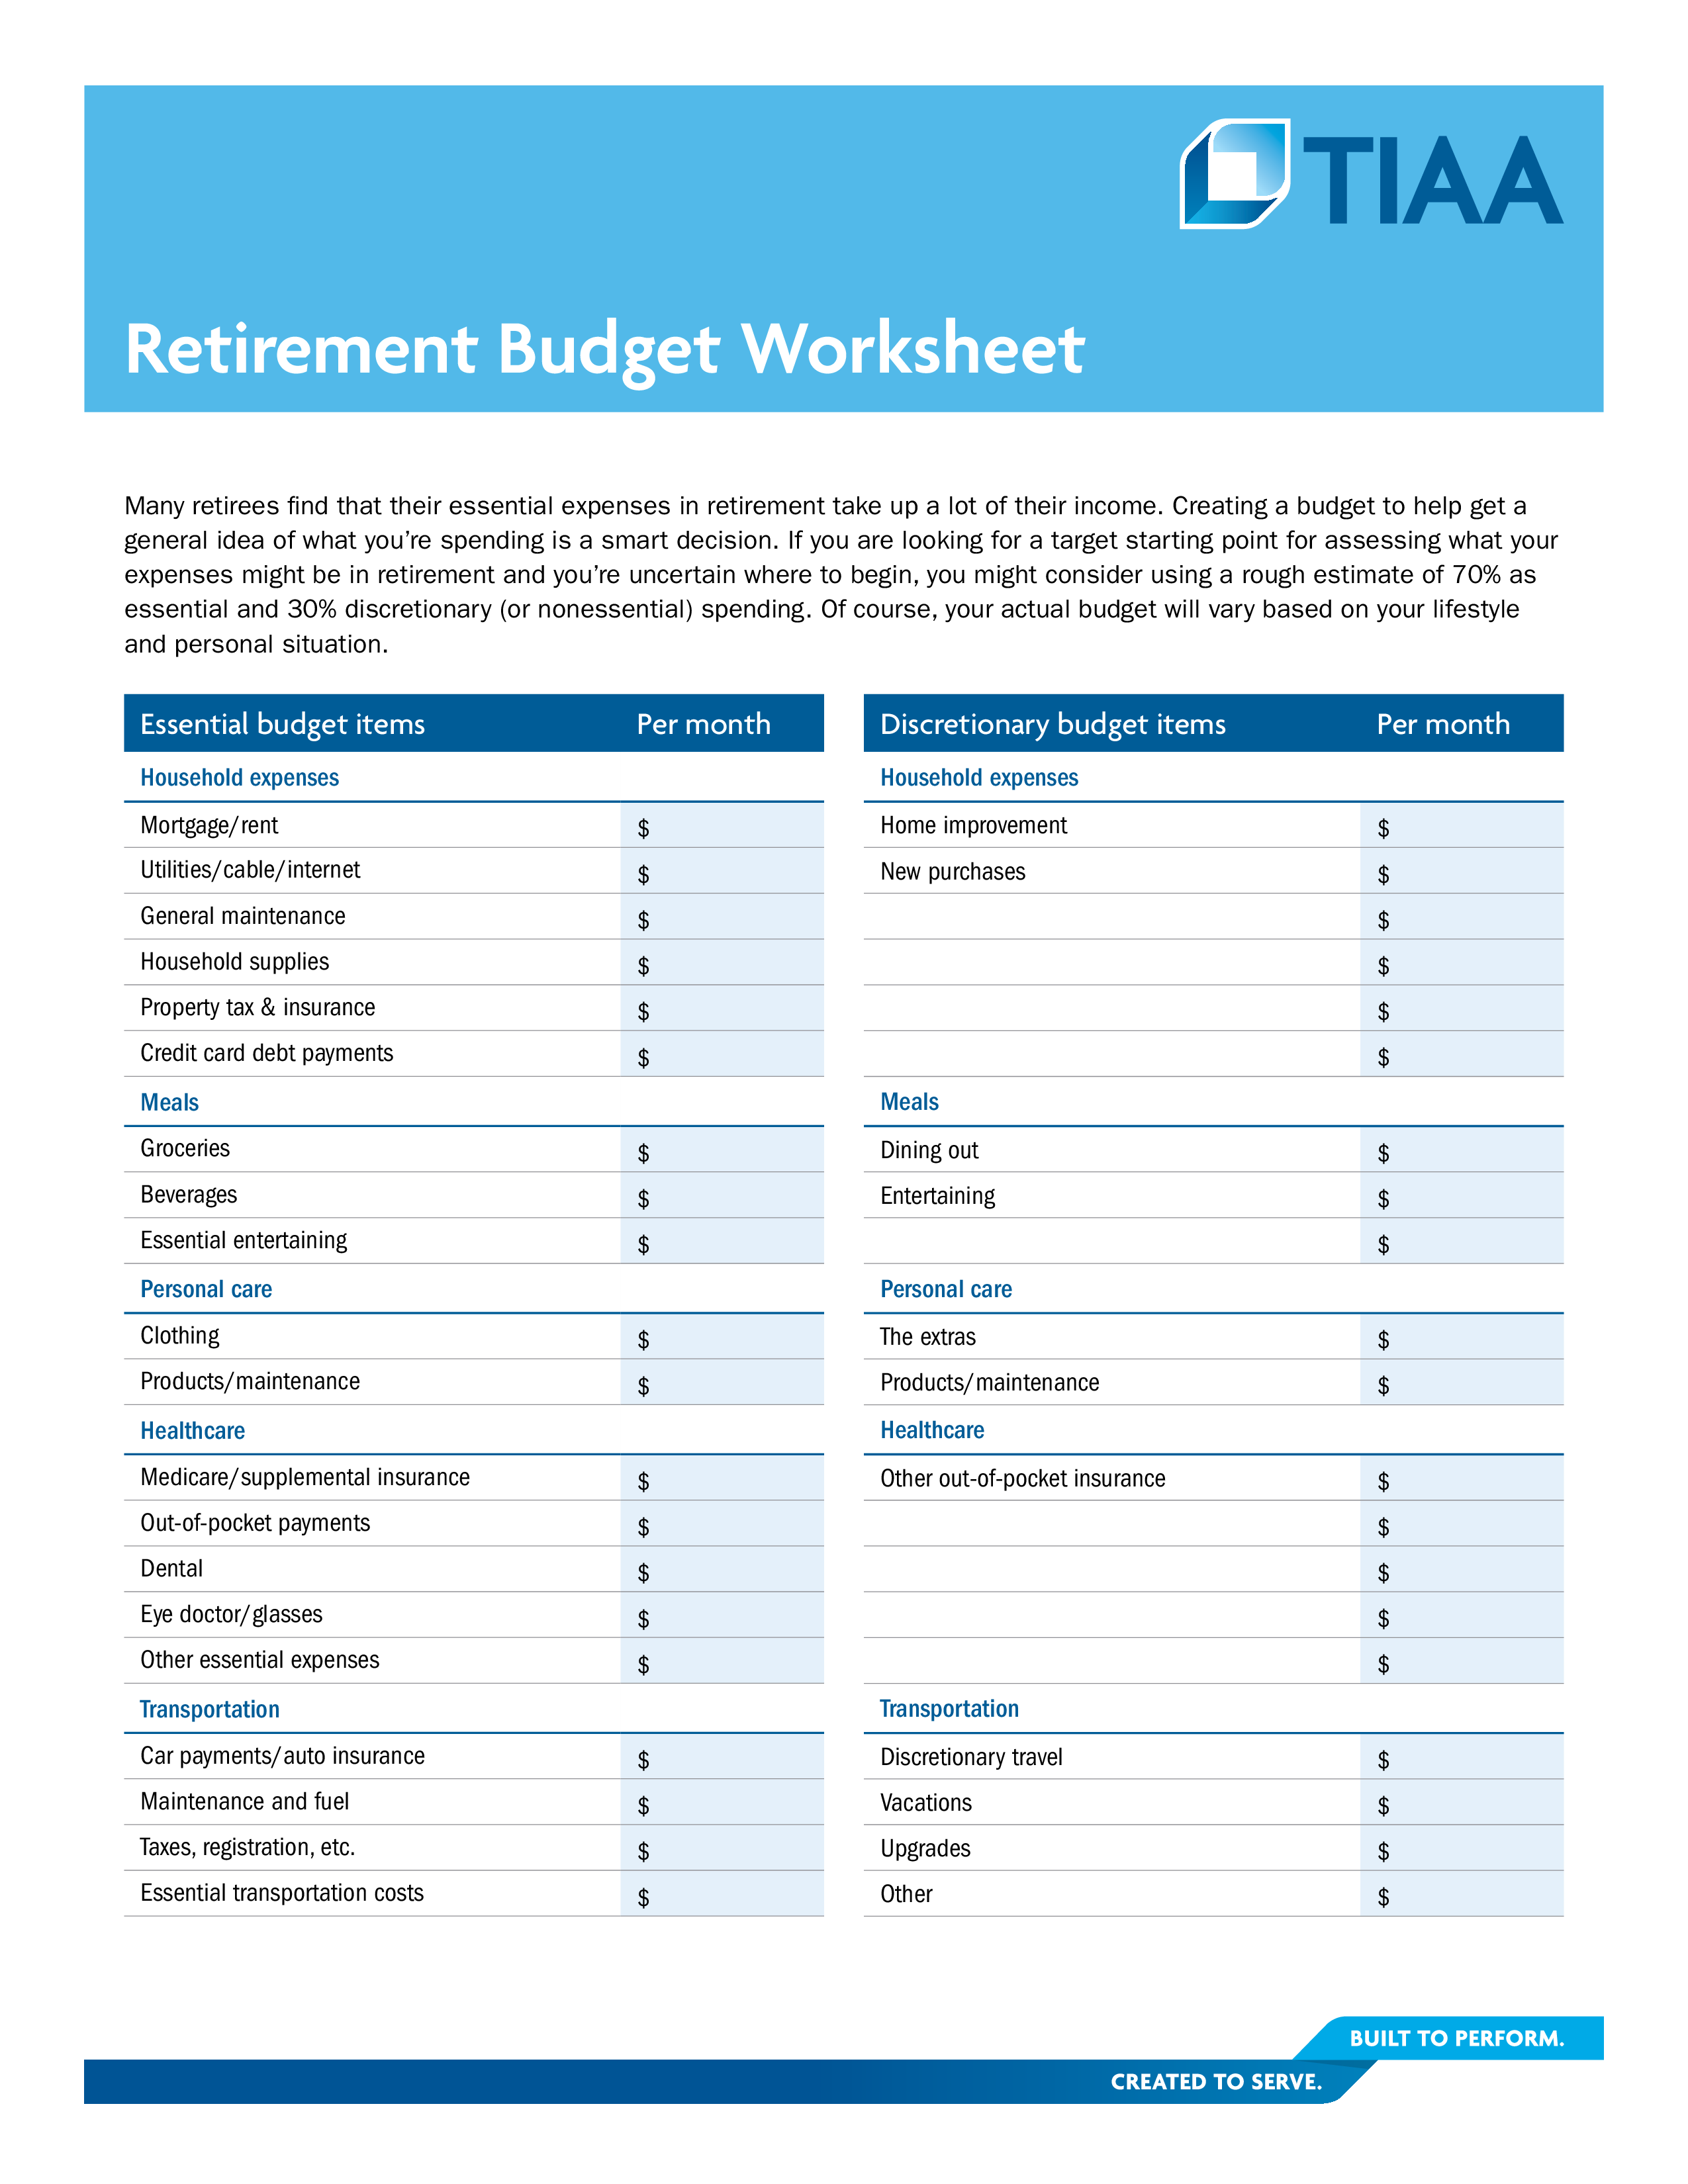 Retirement Budget Worksheet Templates At Allbusinesstemplates